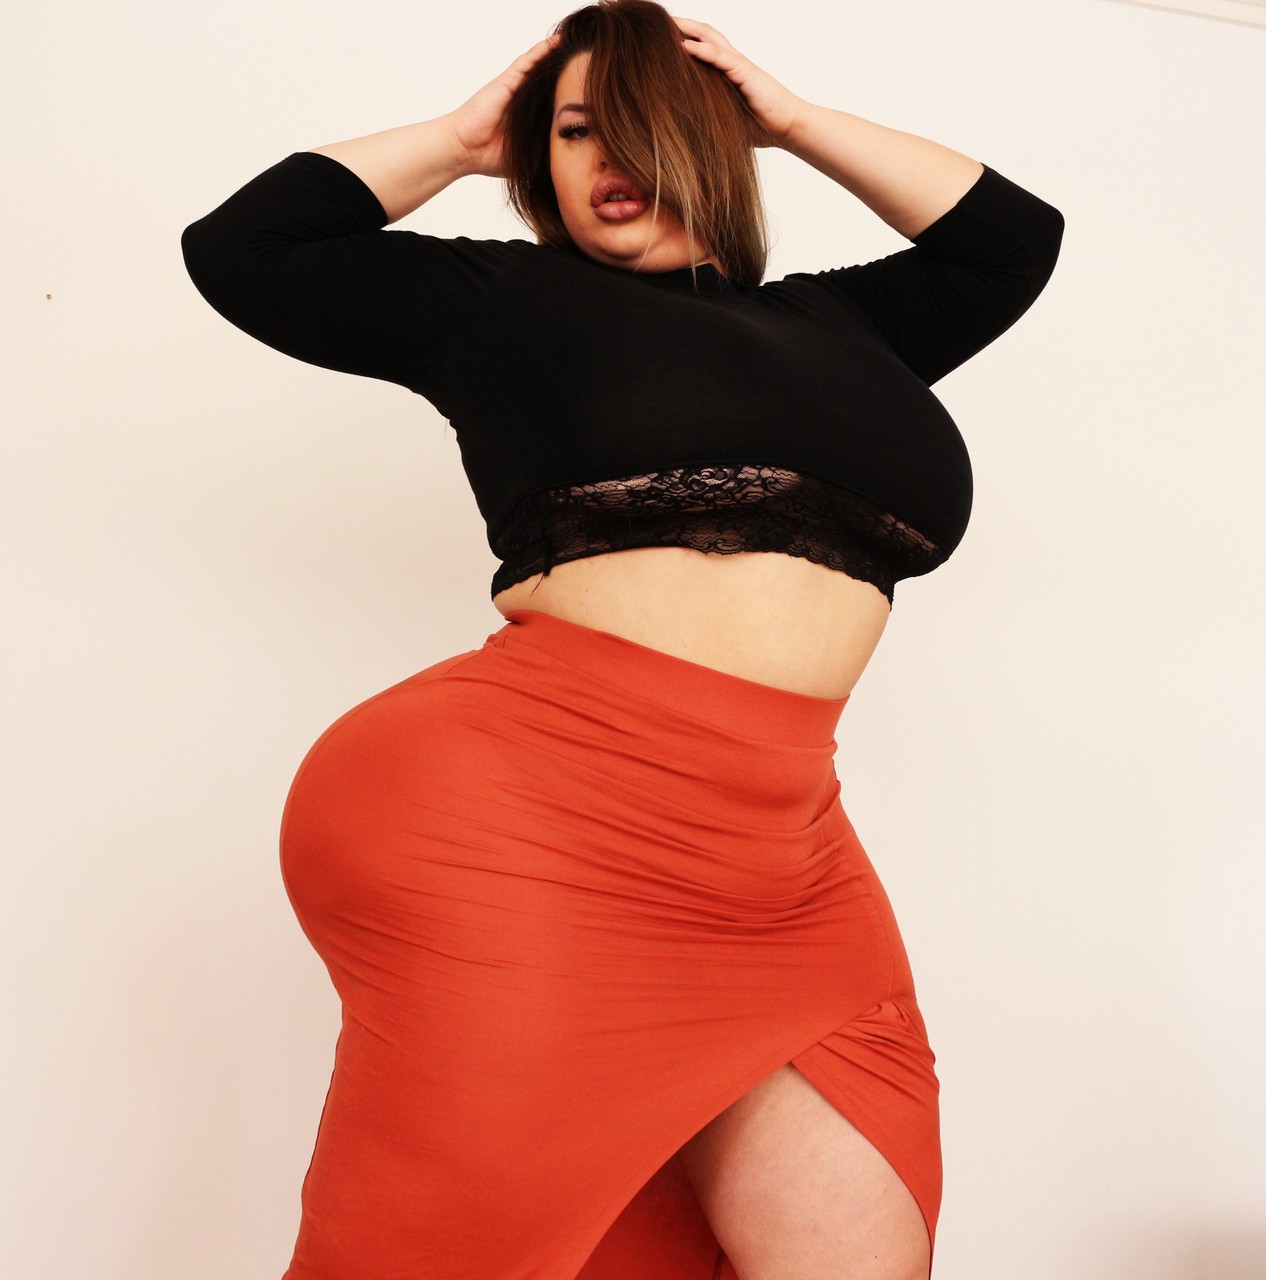 Stunning MILF fatty Natasha Crown flaunting her very big ass in a tight skirt porno fotky #423816664 | Natasha Crown Pics, Natasha Crown, BBW, mobilní porno